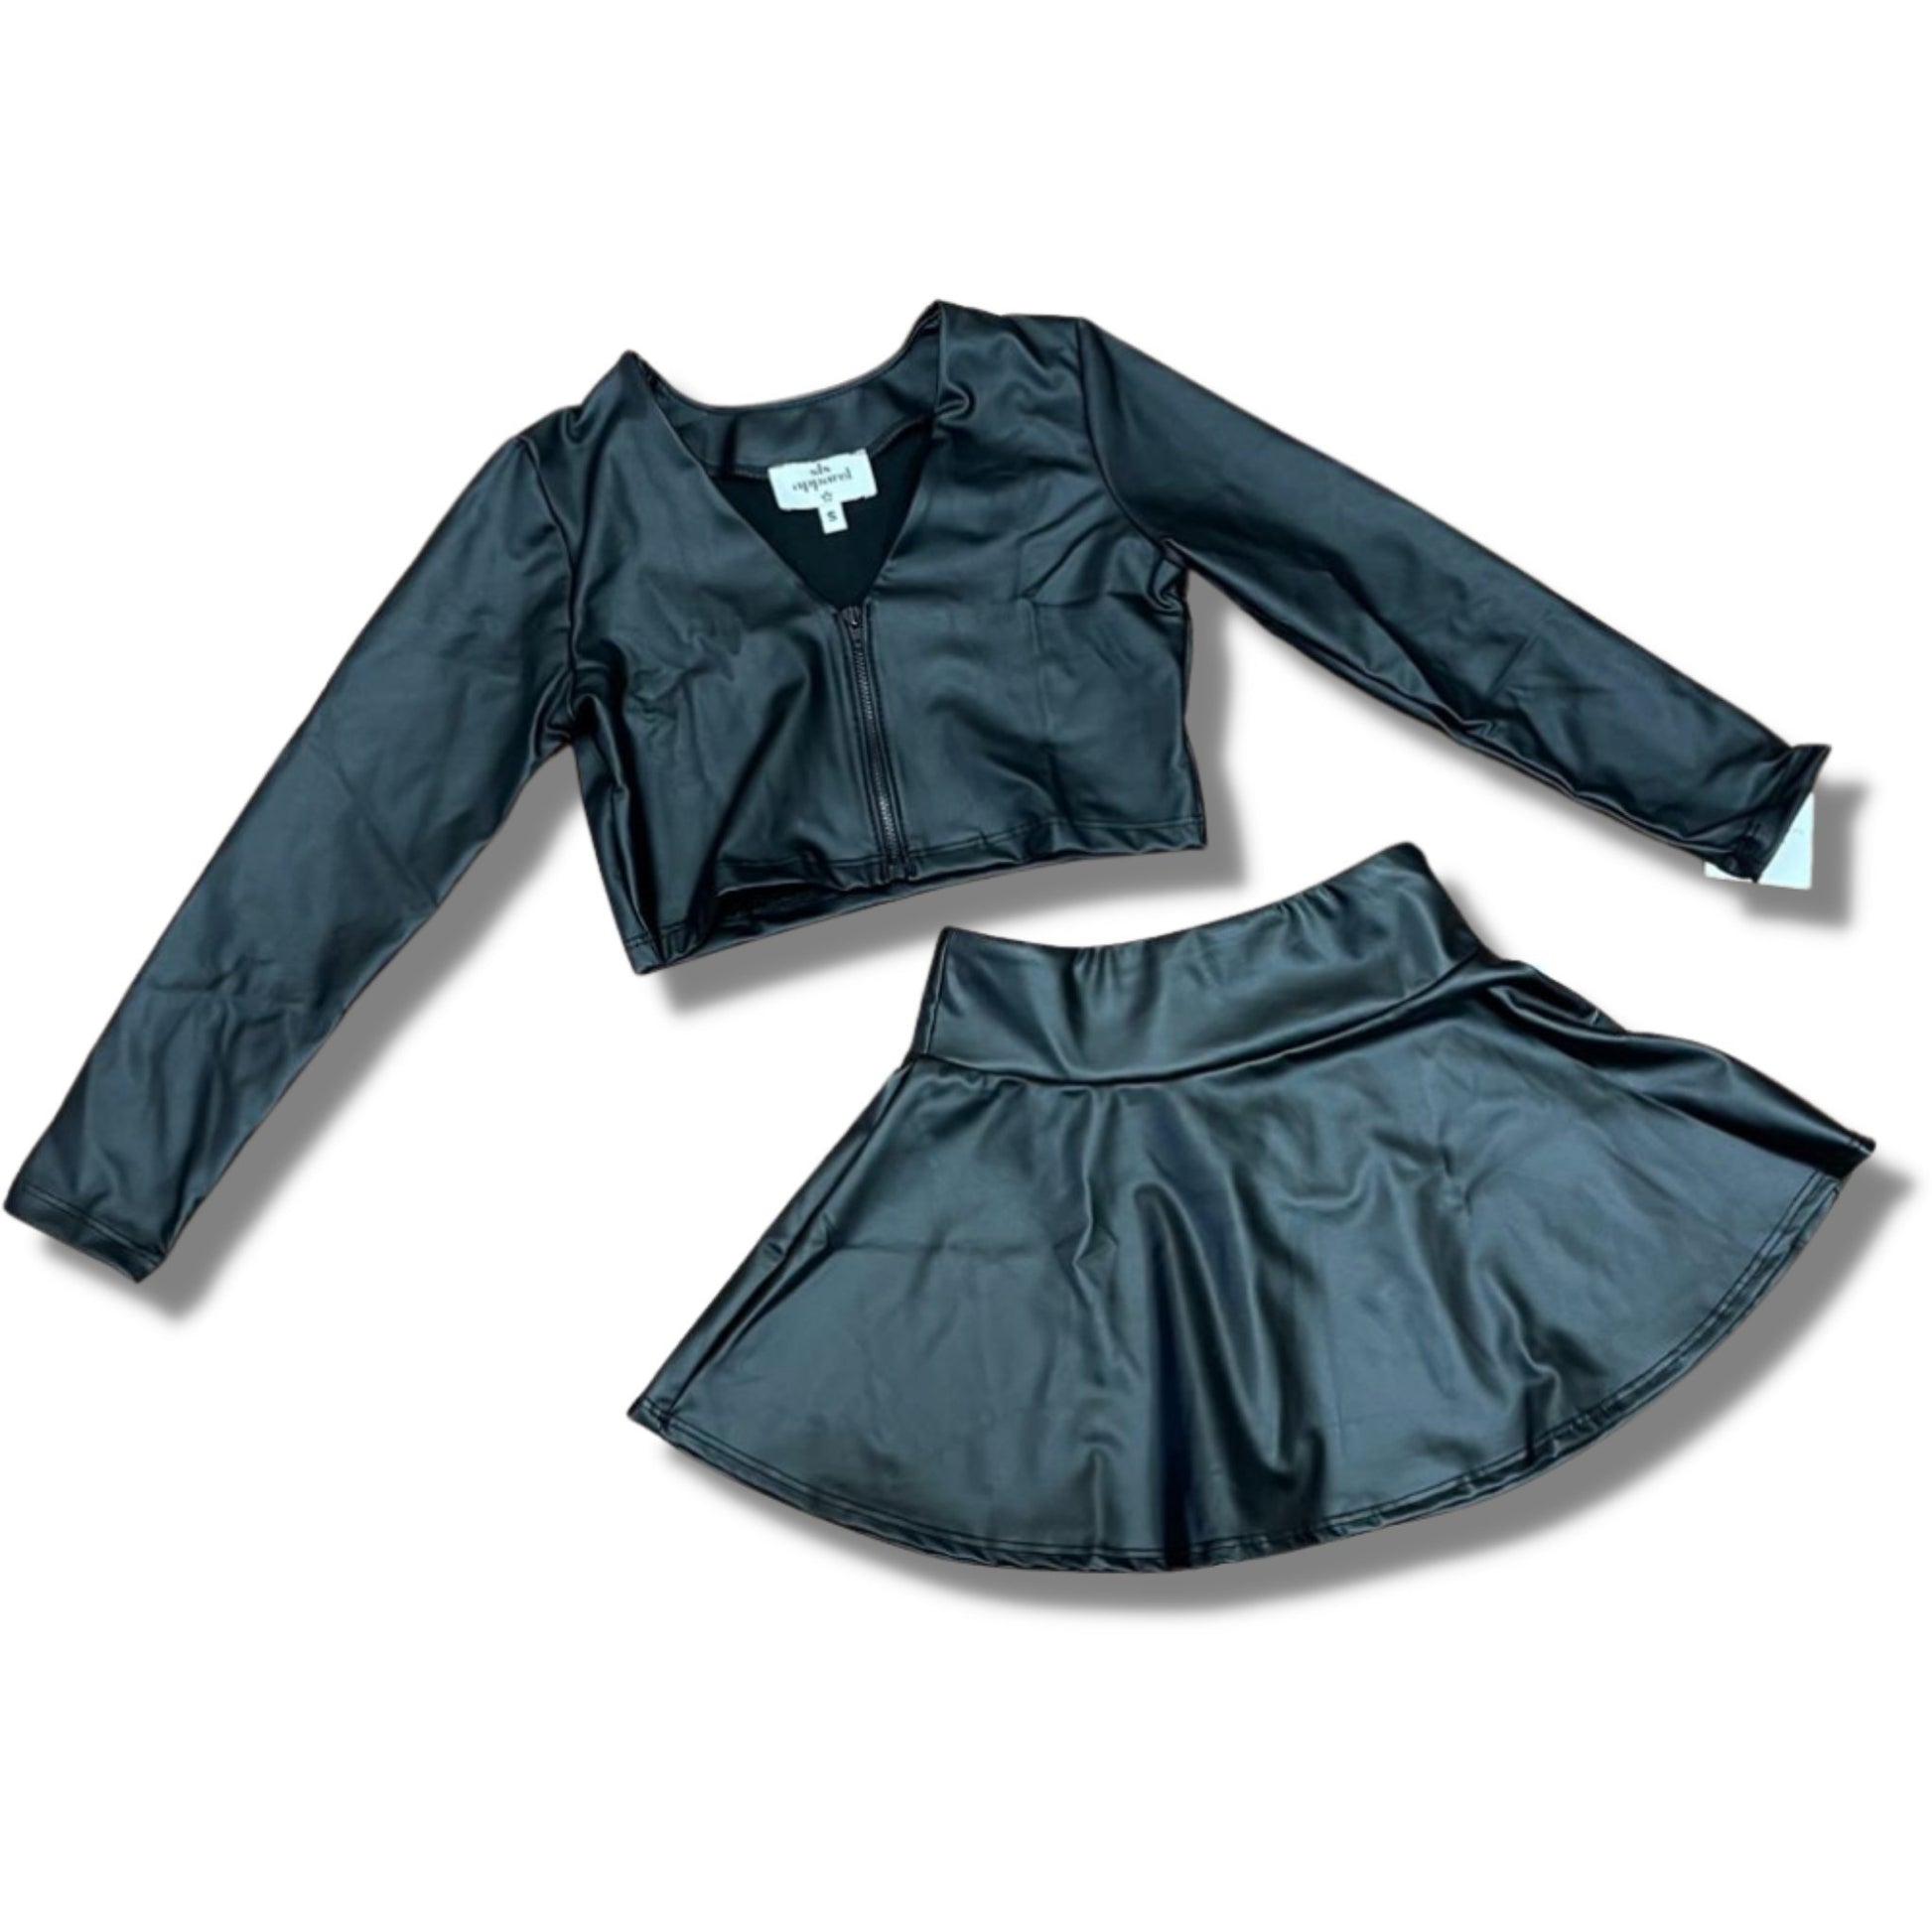 SLS Apparel Black Pleather Zip Cardigan - a Spirit Animal - Cardigan $45-$60 7/8 black